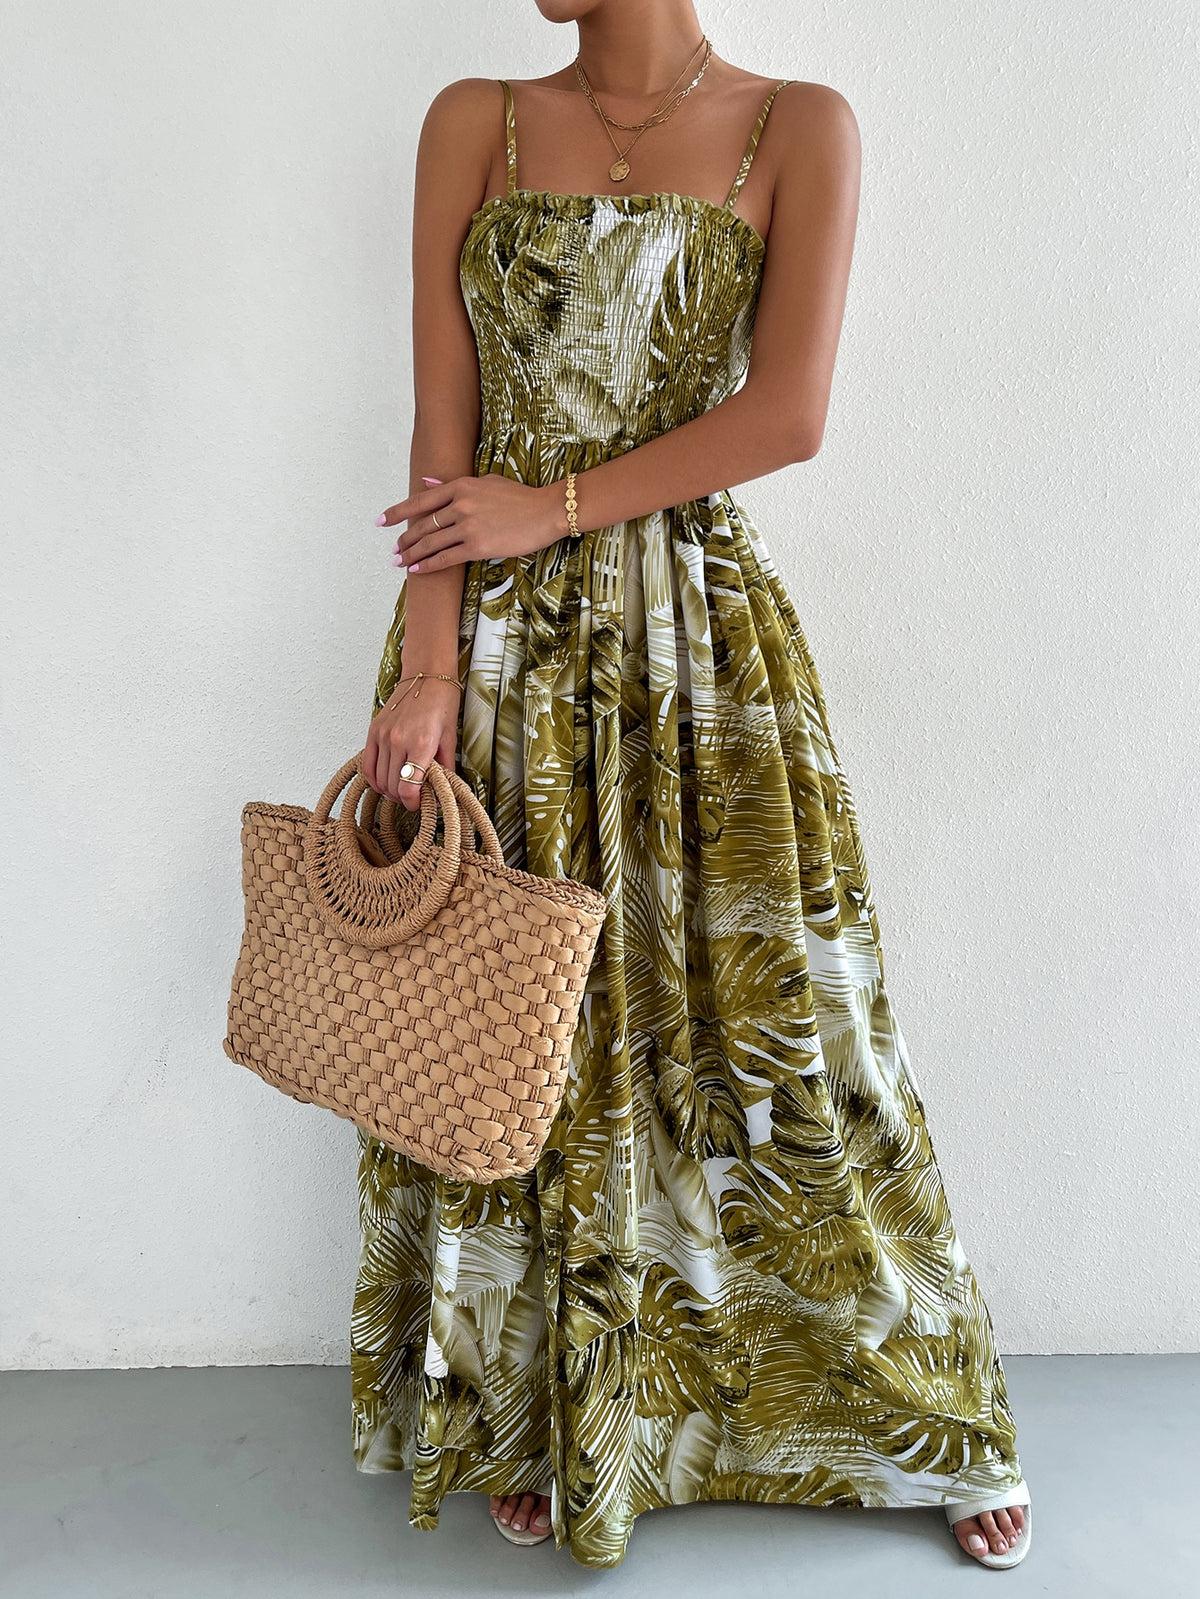 Shirred Cami Dress in Tropical Print - 